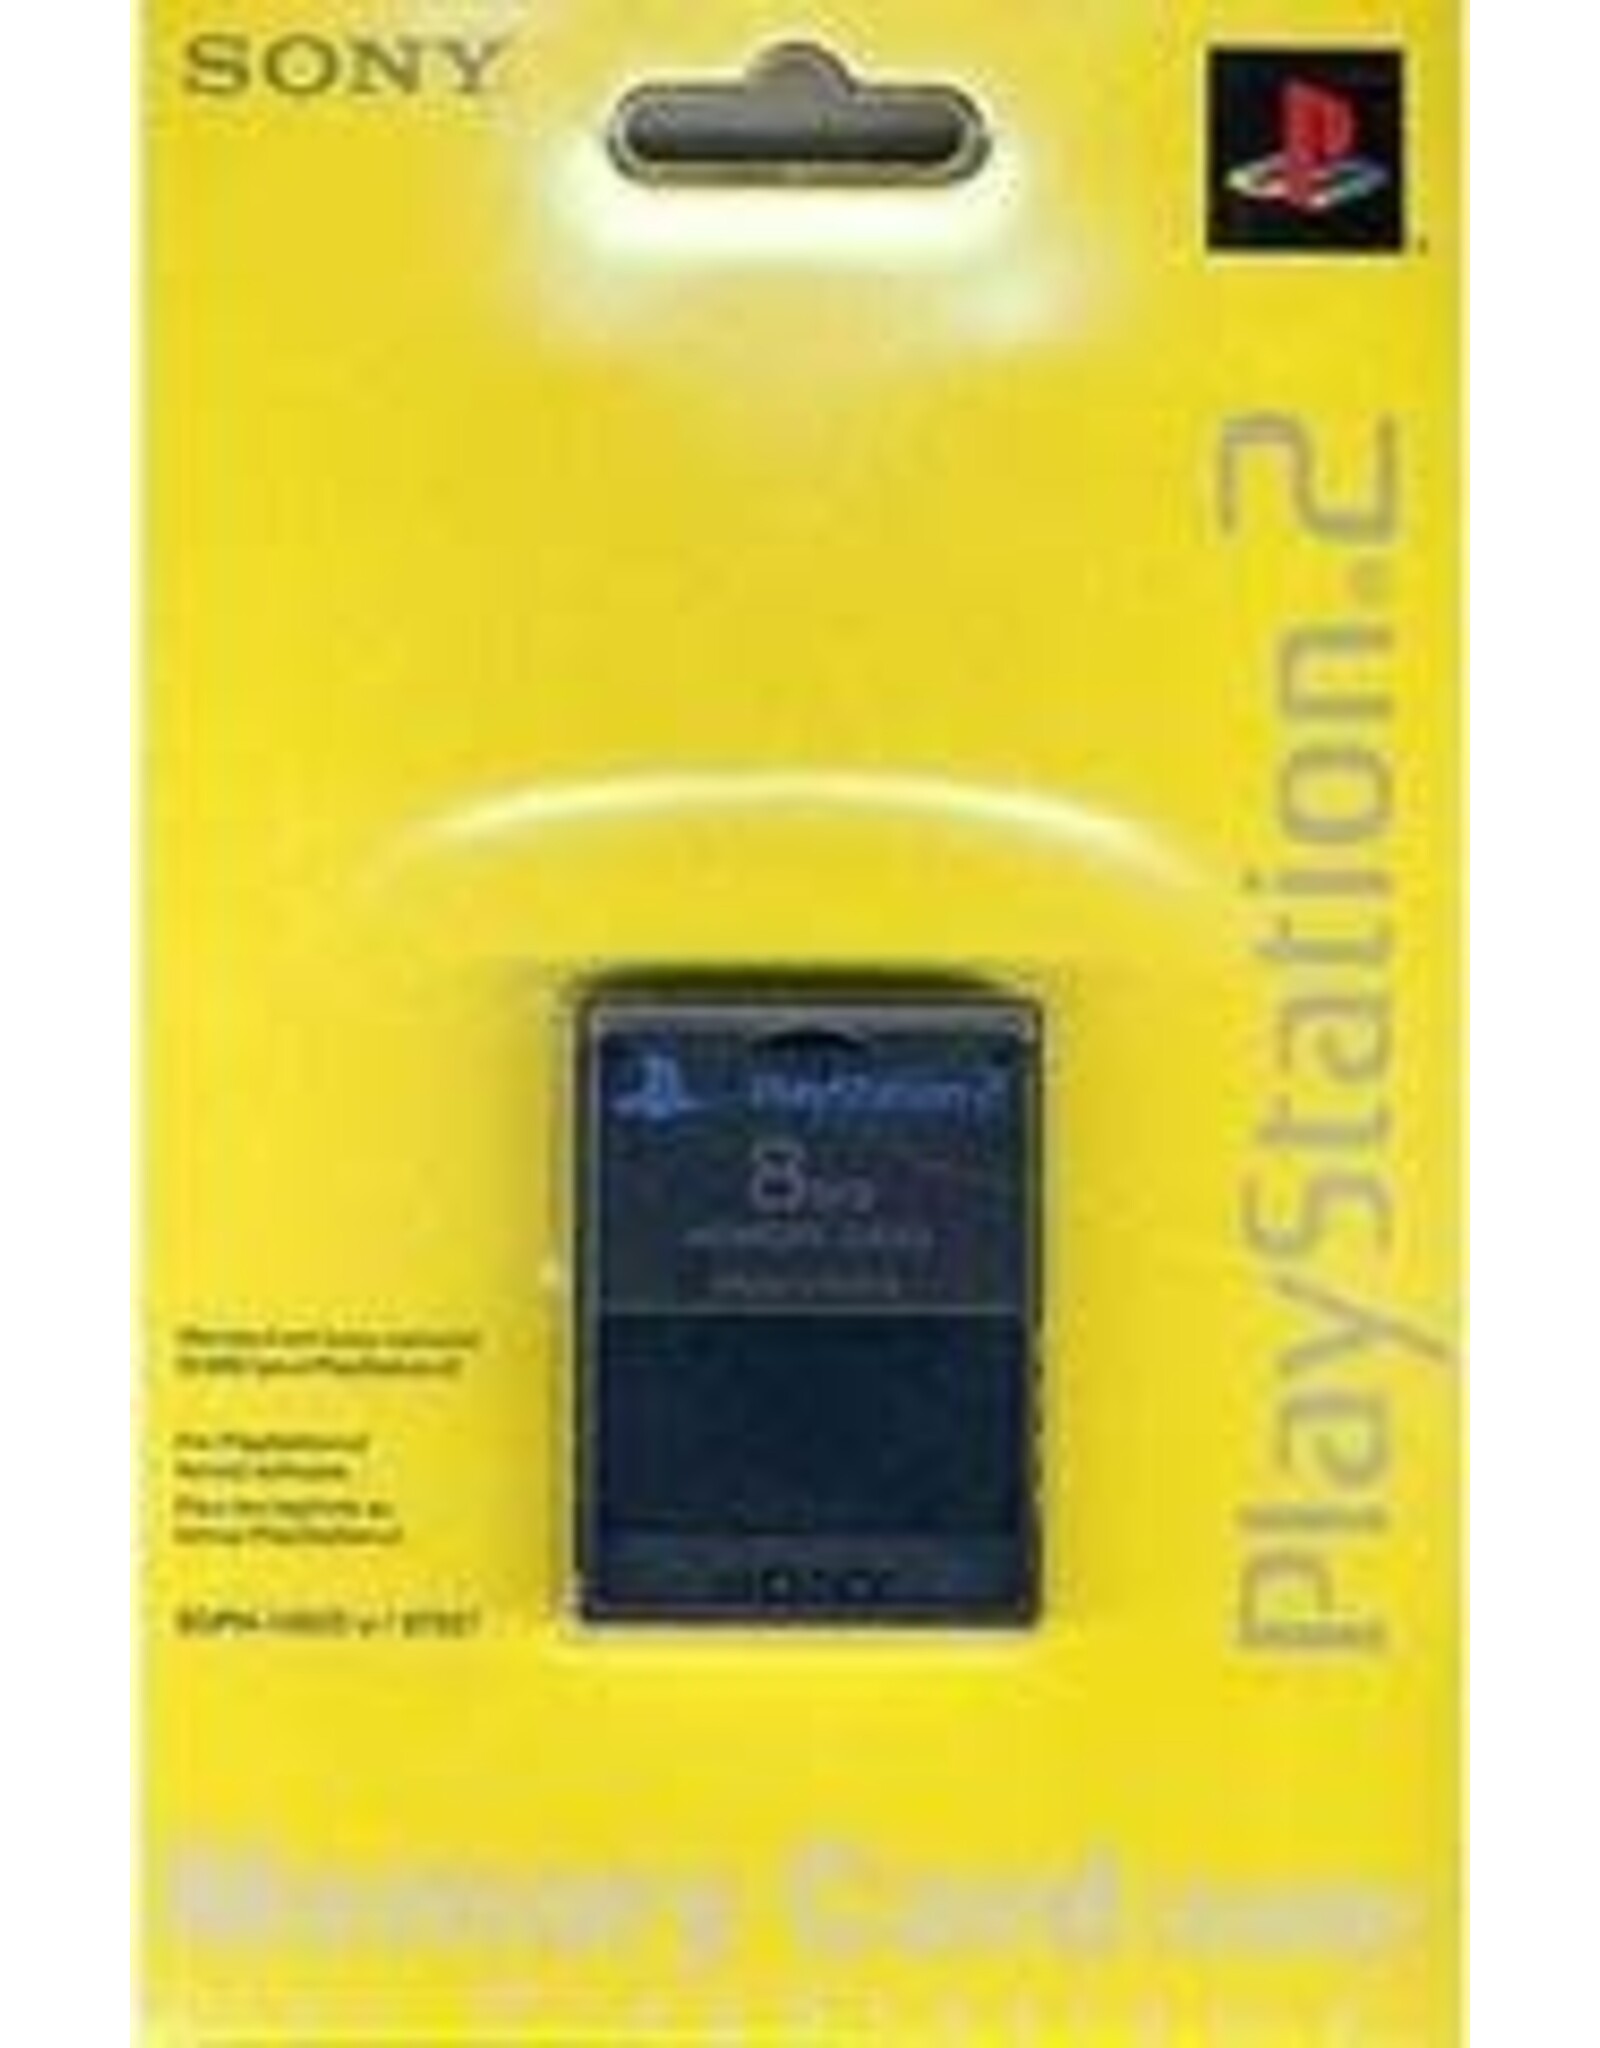 Playstation 2 PS2 2 8MB Memory Card (Factory Sealed)